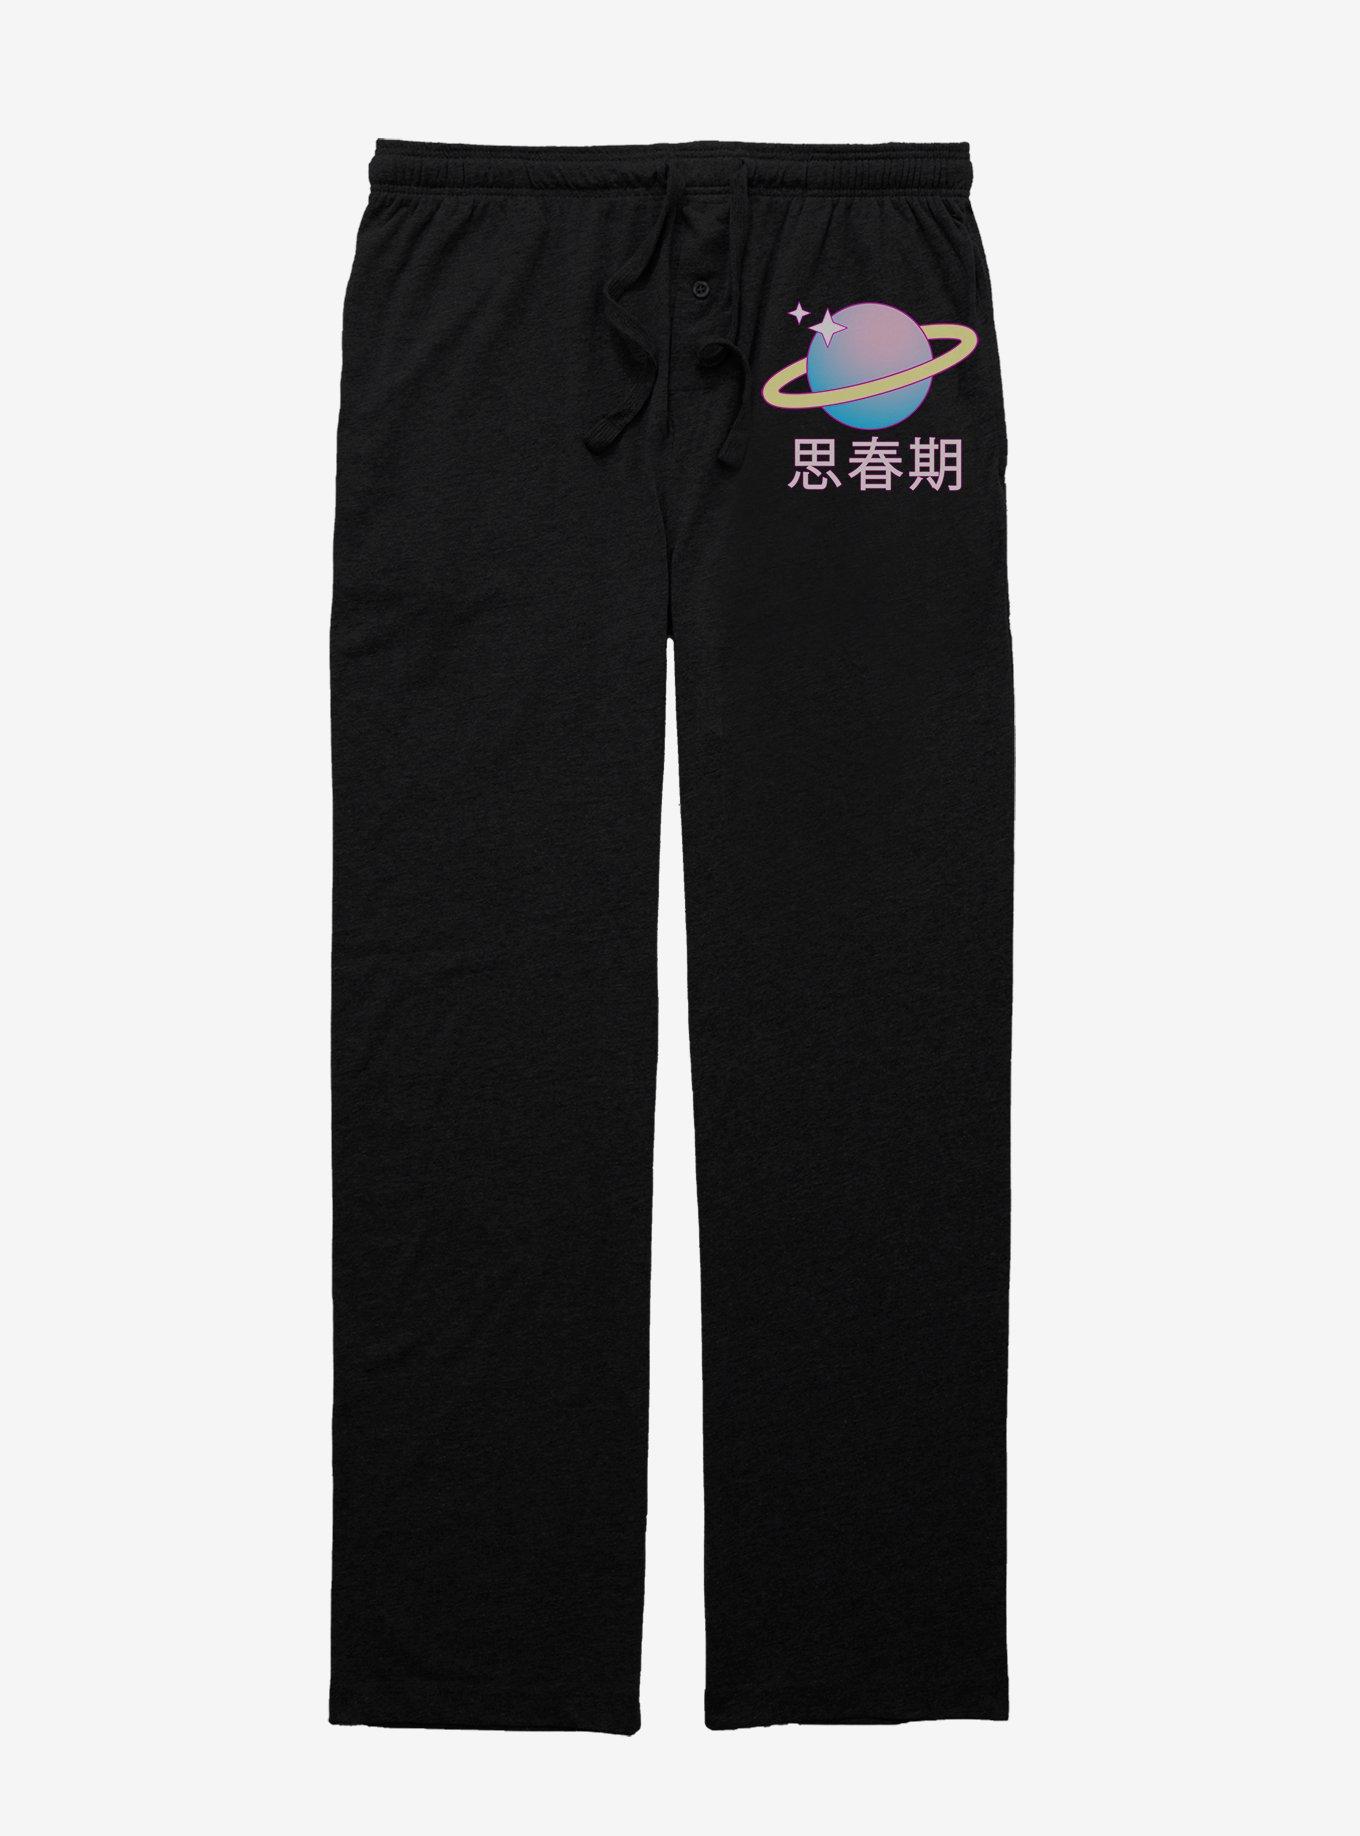 Spacey Saturn Pajama Pants, BLACK, hi-res